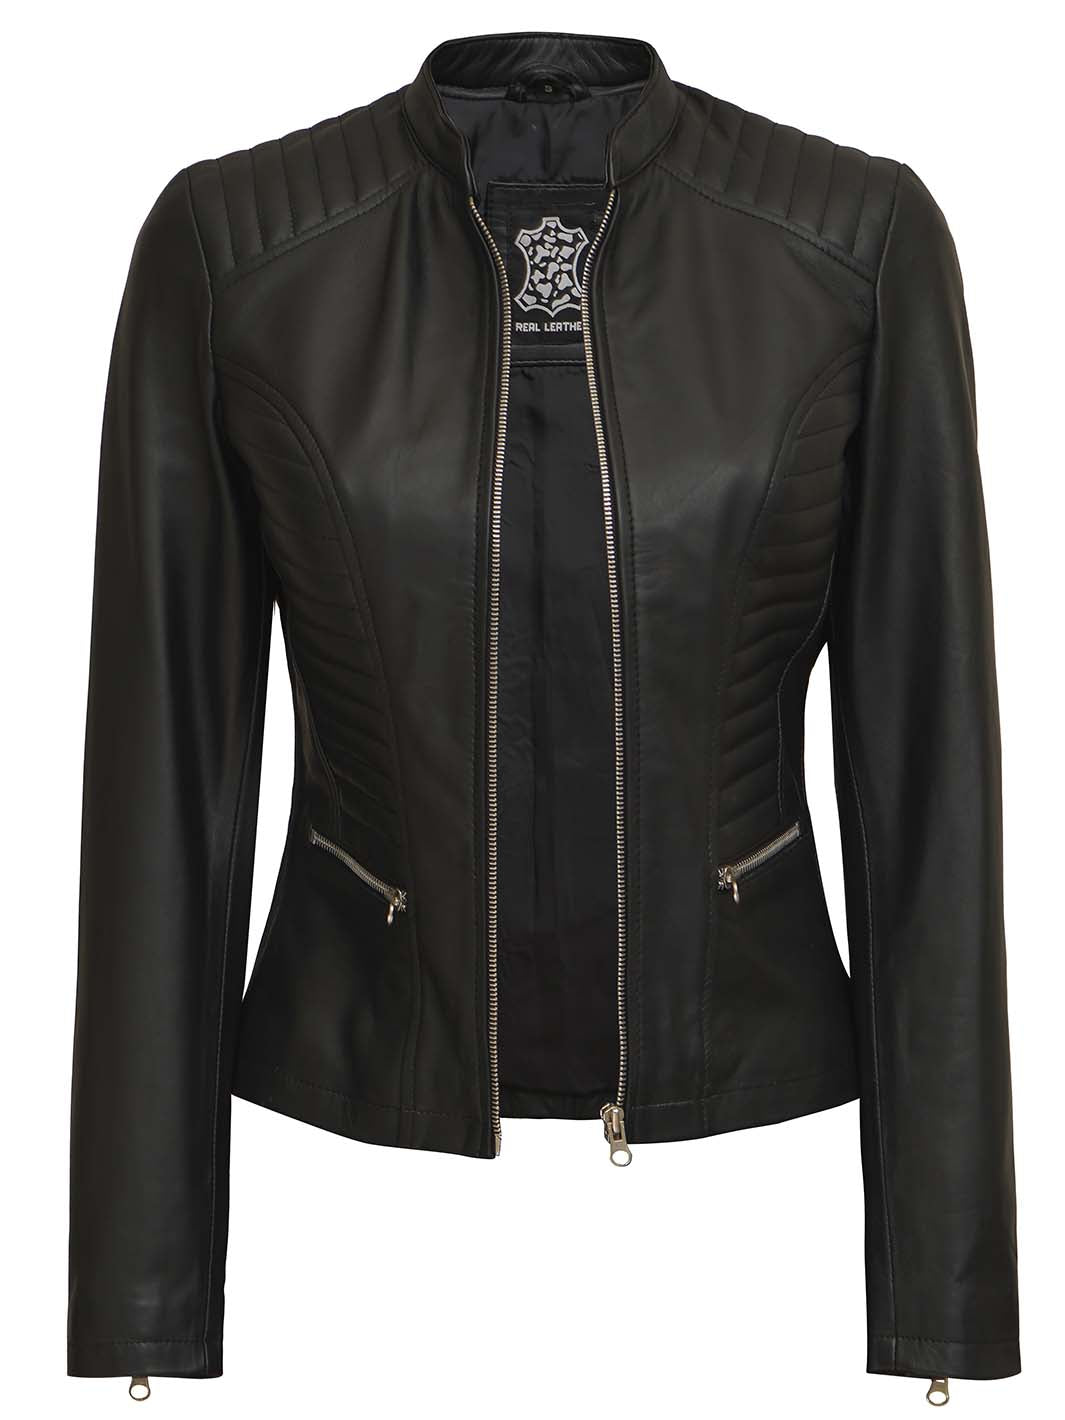 Rachel Womens Black Leather Jacket